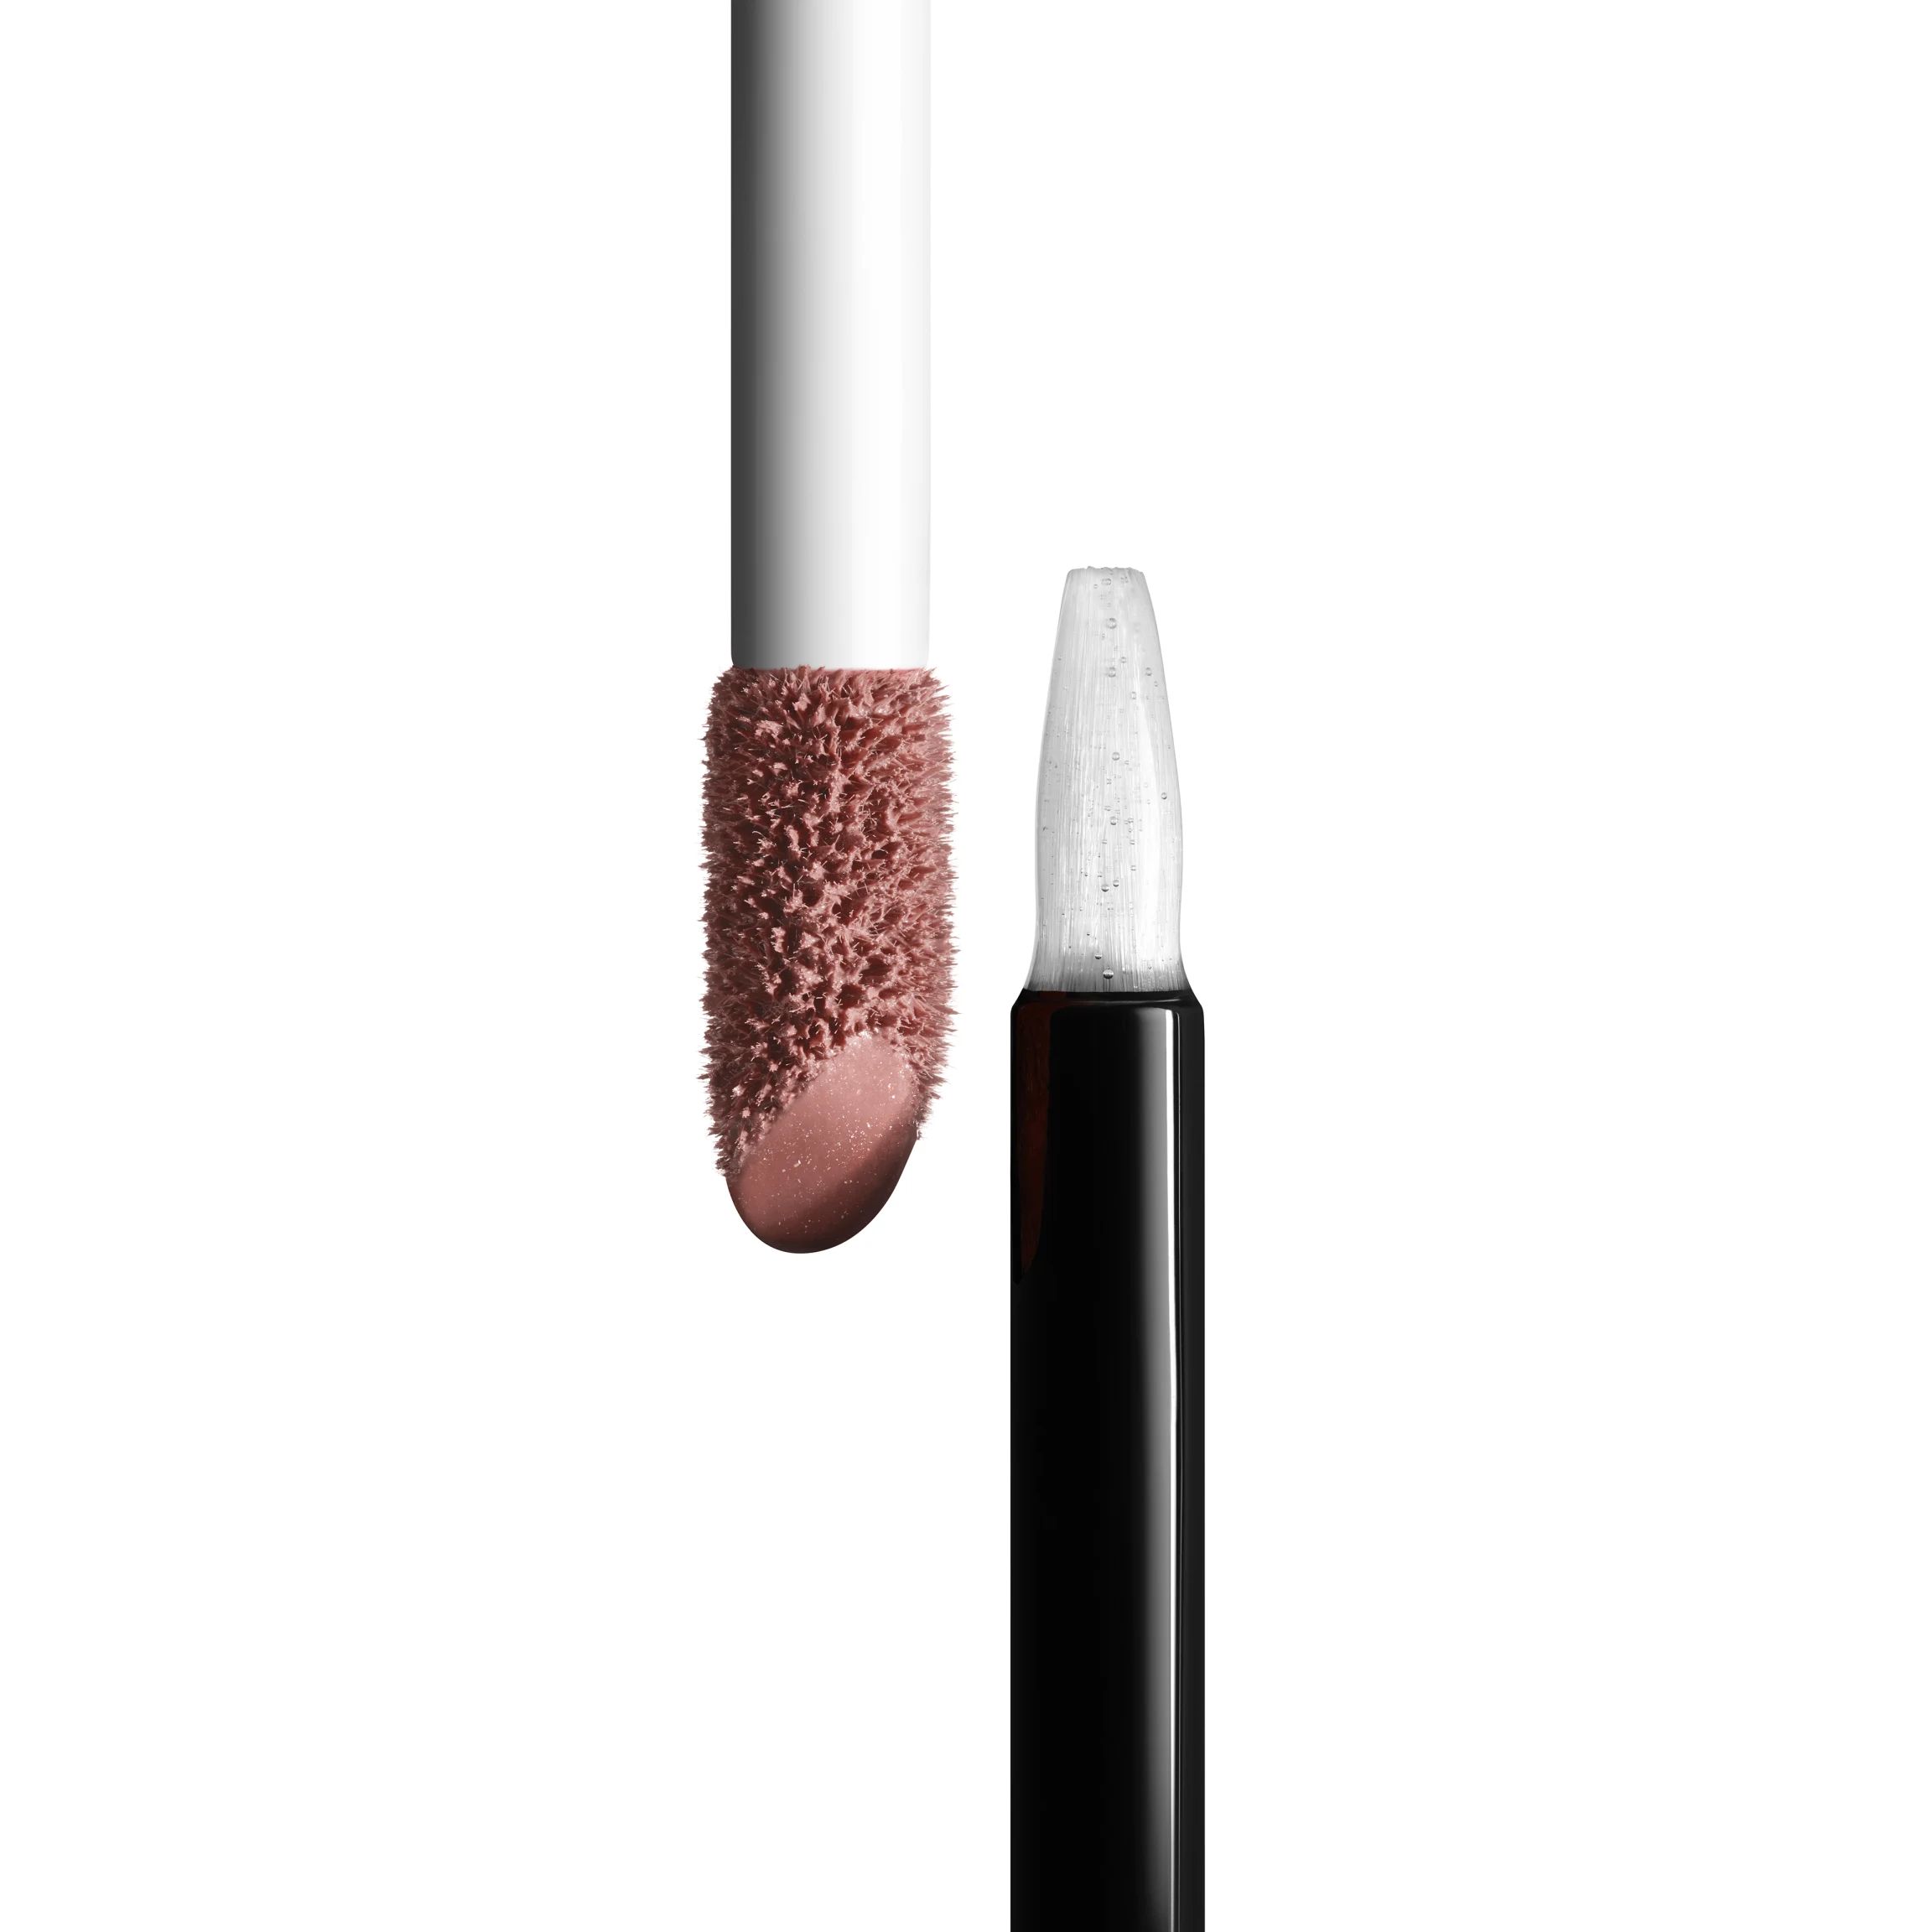 LE ROUGE DUO ULTRA TENUE Ultrawear liquid lip colour 43 - Sensual rose | CHANEL | Chanel, Inc. (US)